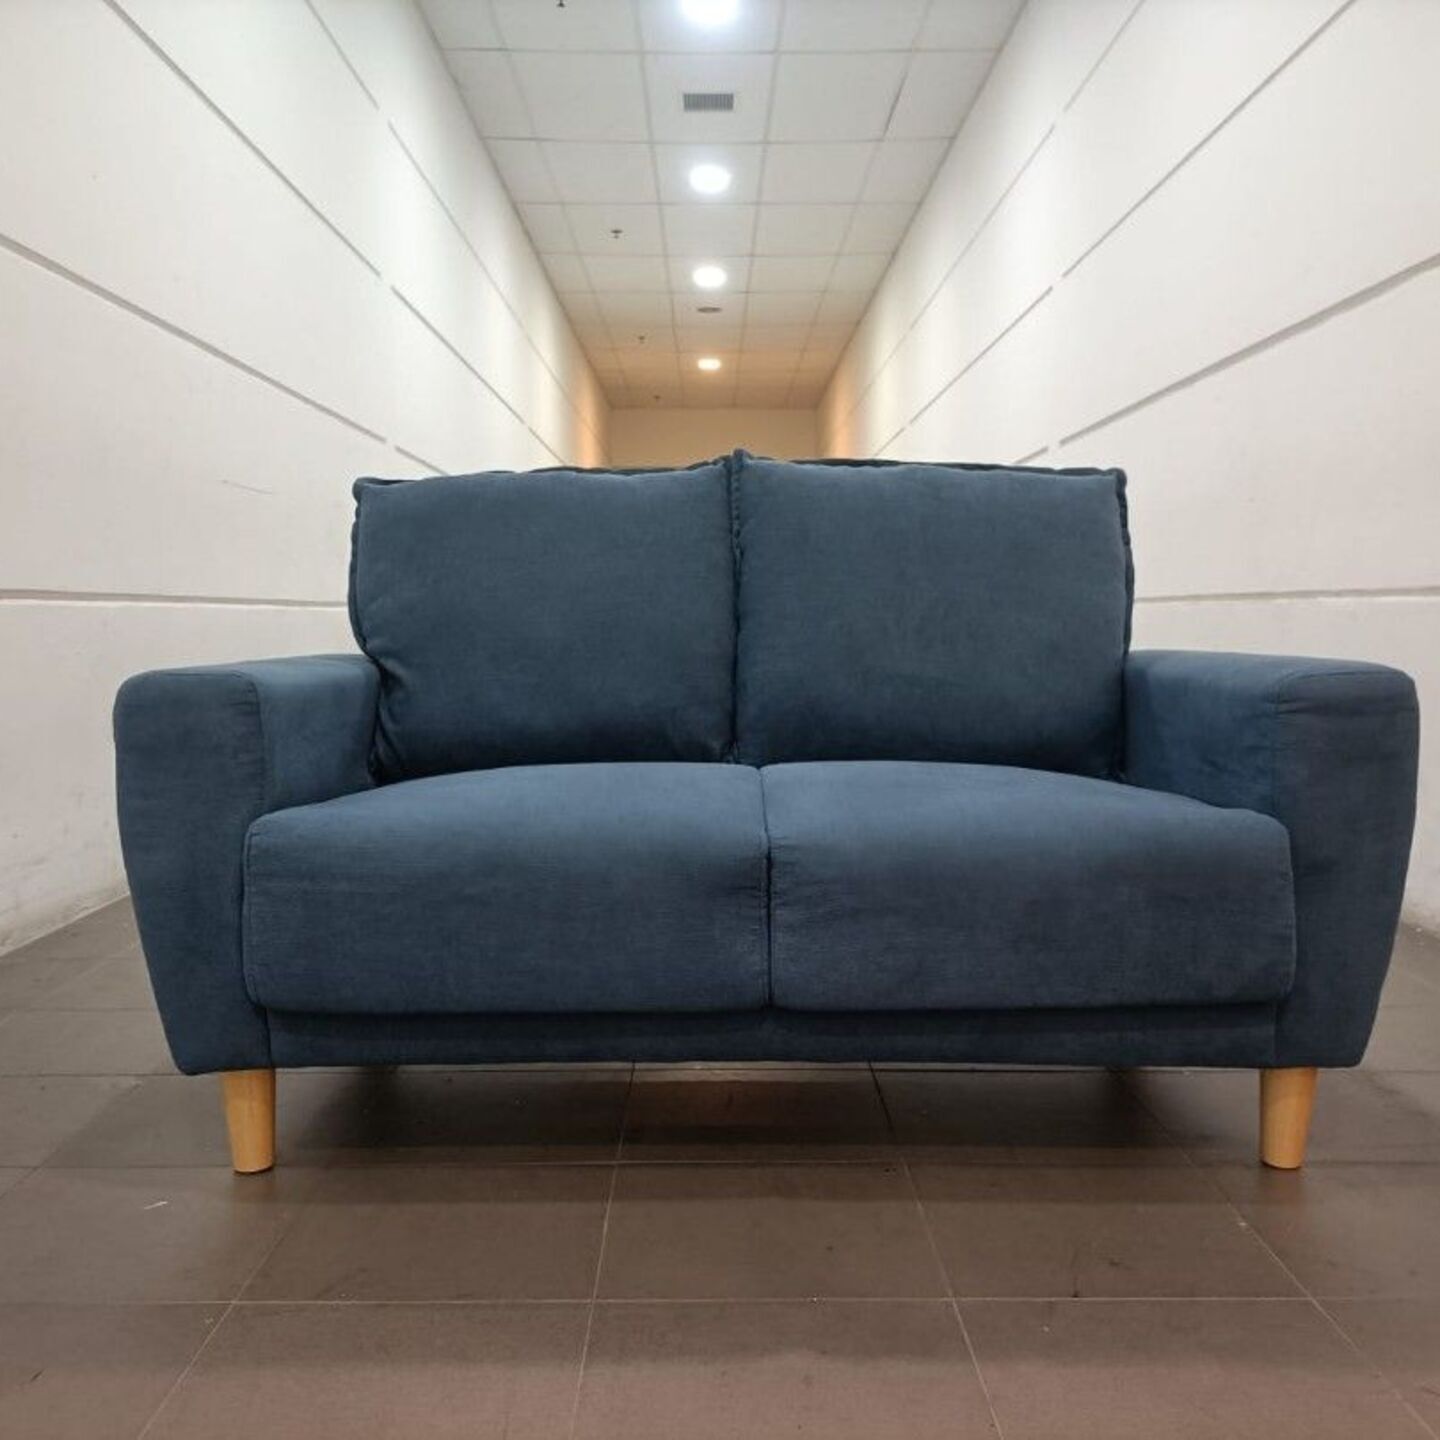 CHANTE 2 Seater Sofa in BLUE FABRIC